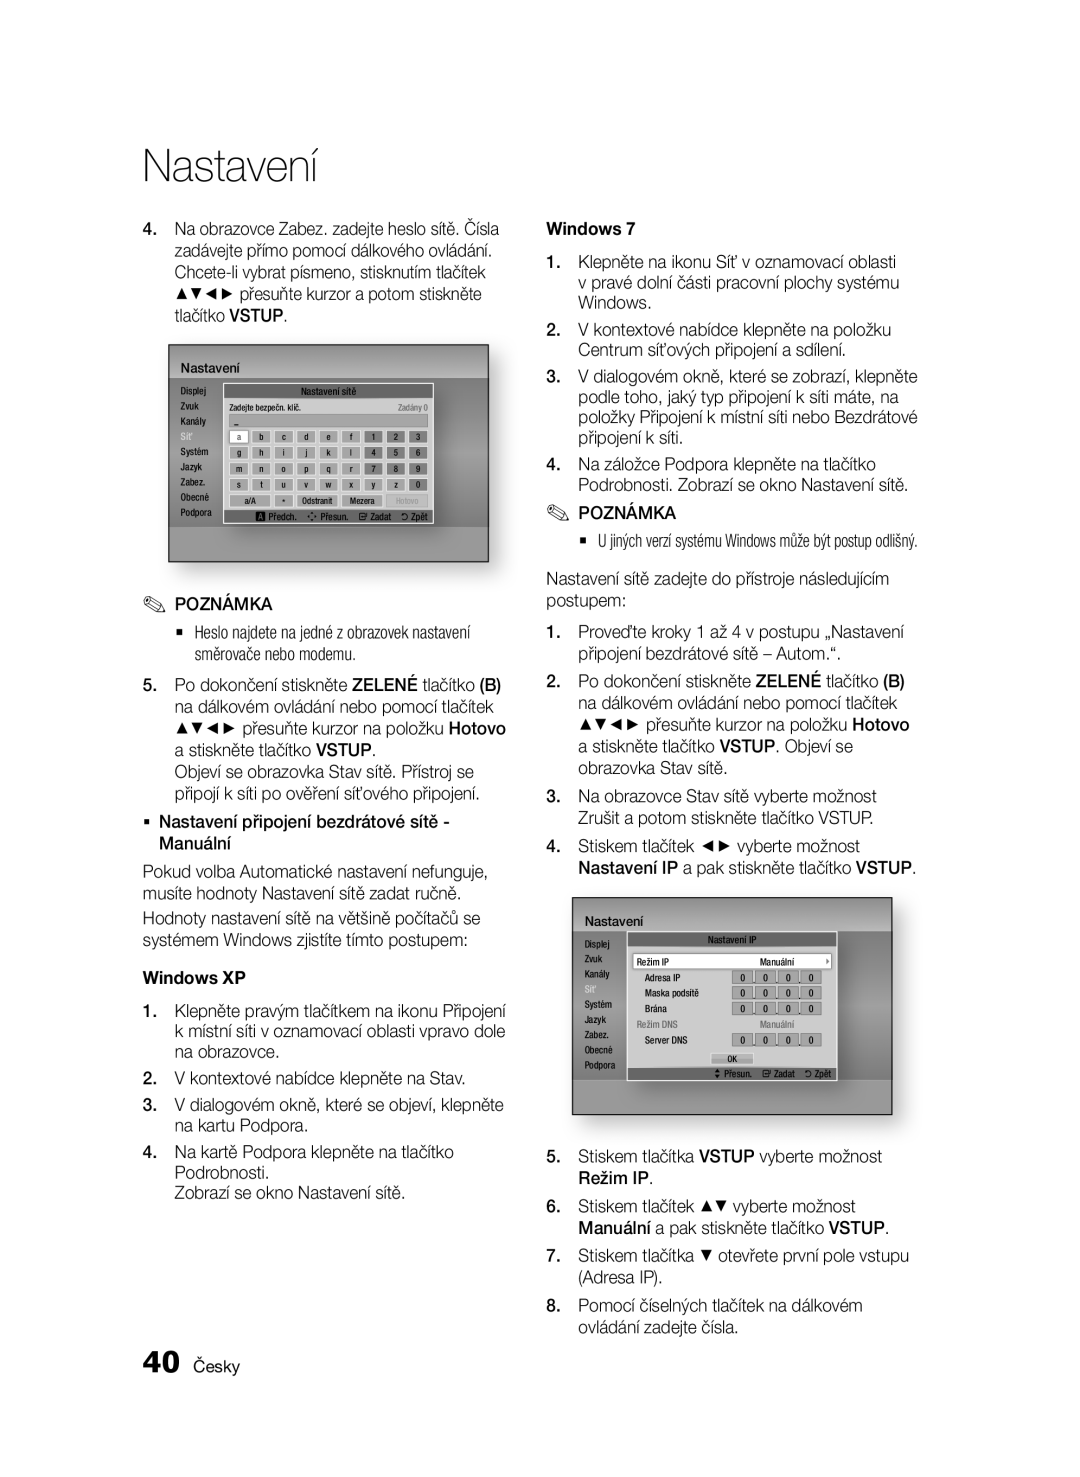 Samsung BD-E6300/EN manual Nastavení, Windows XP, 40 Česky, Hotovo 